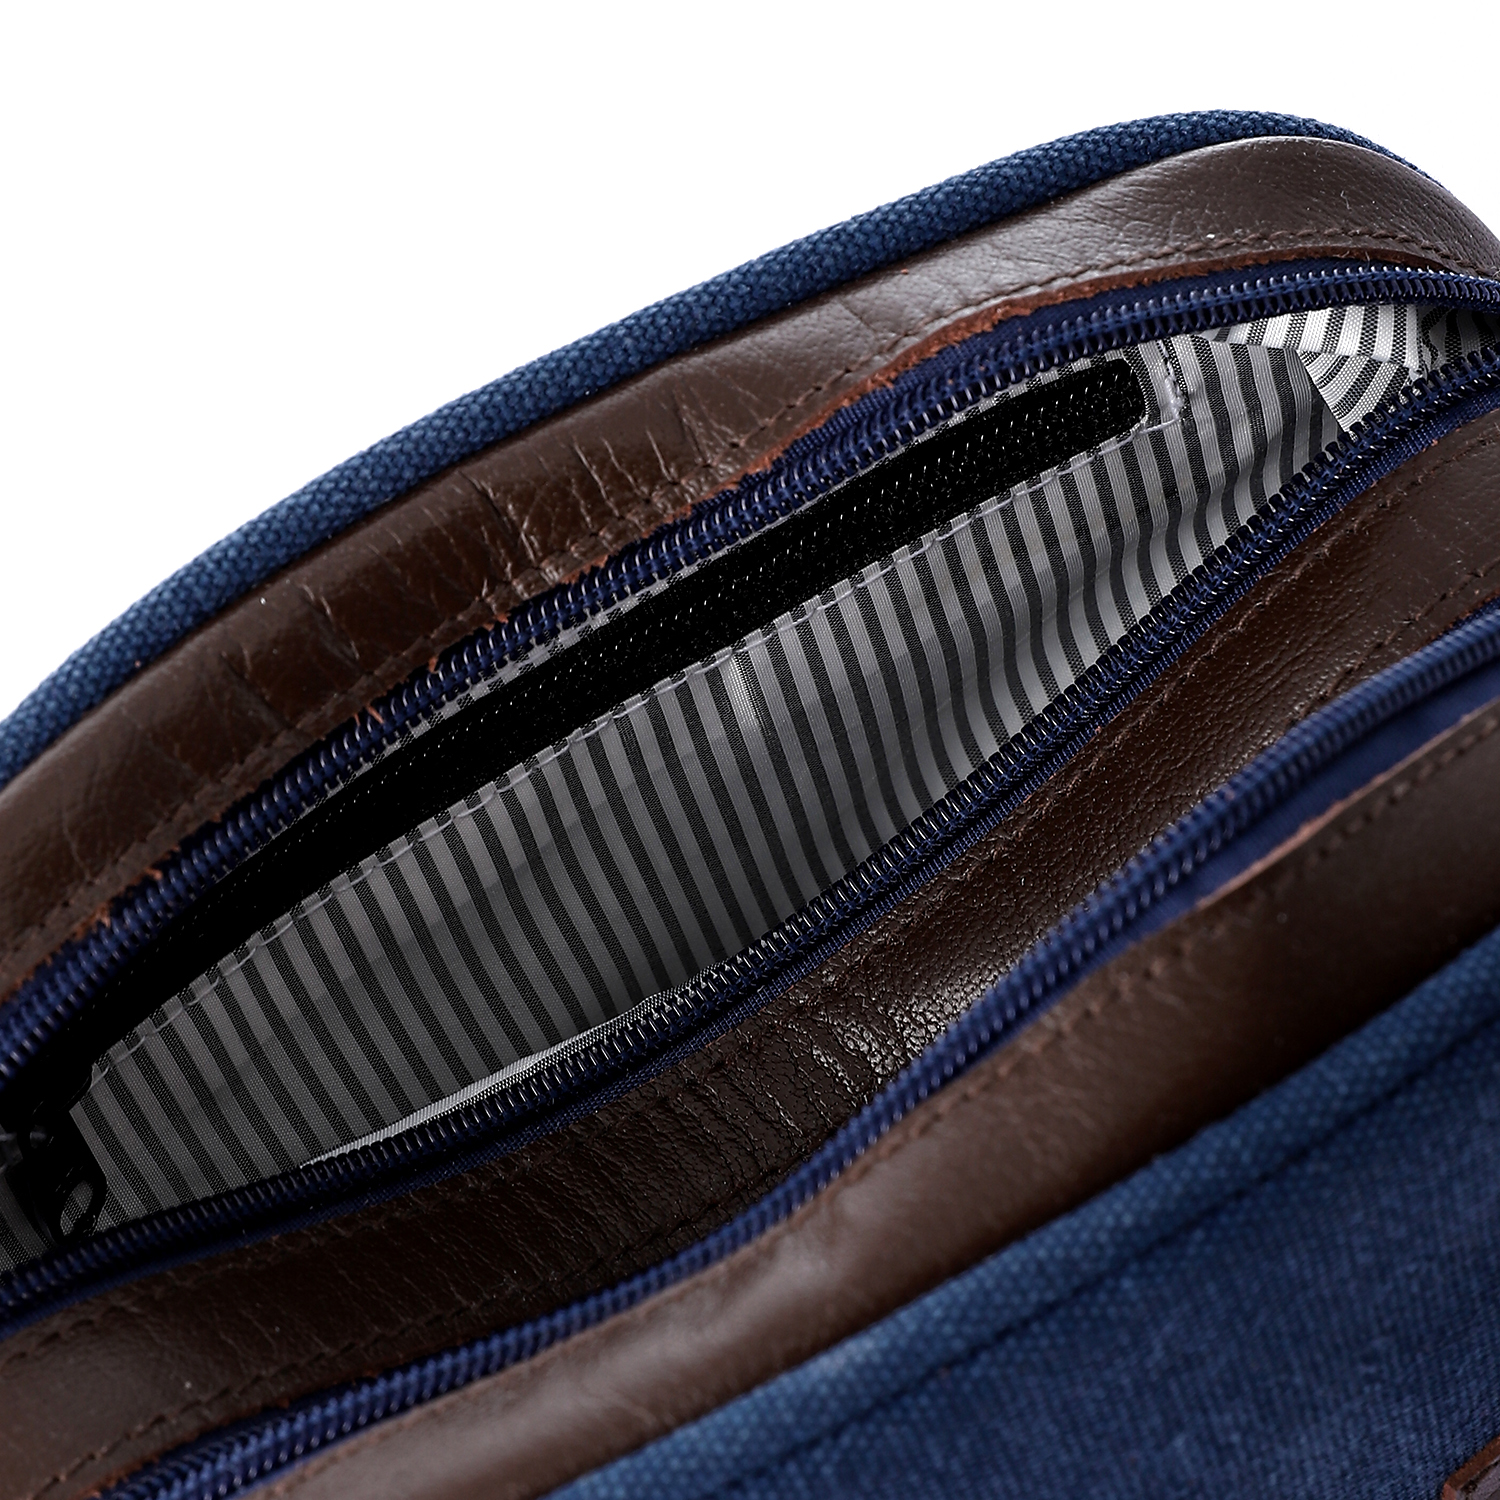 M&O Linen And Genuine Leather Clutch Handbag - Navy Blue